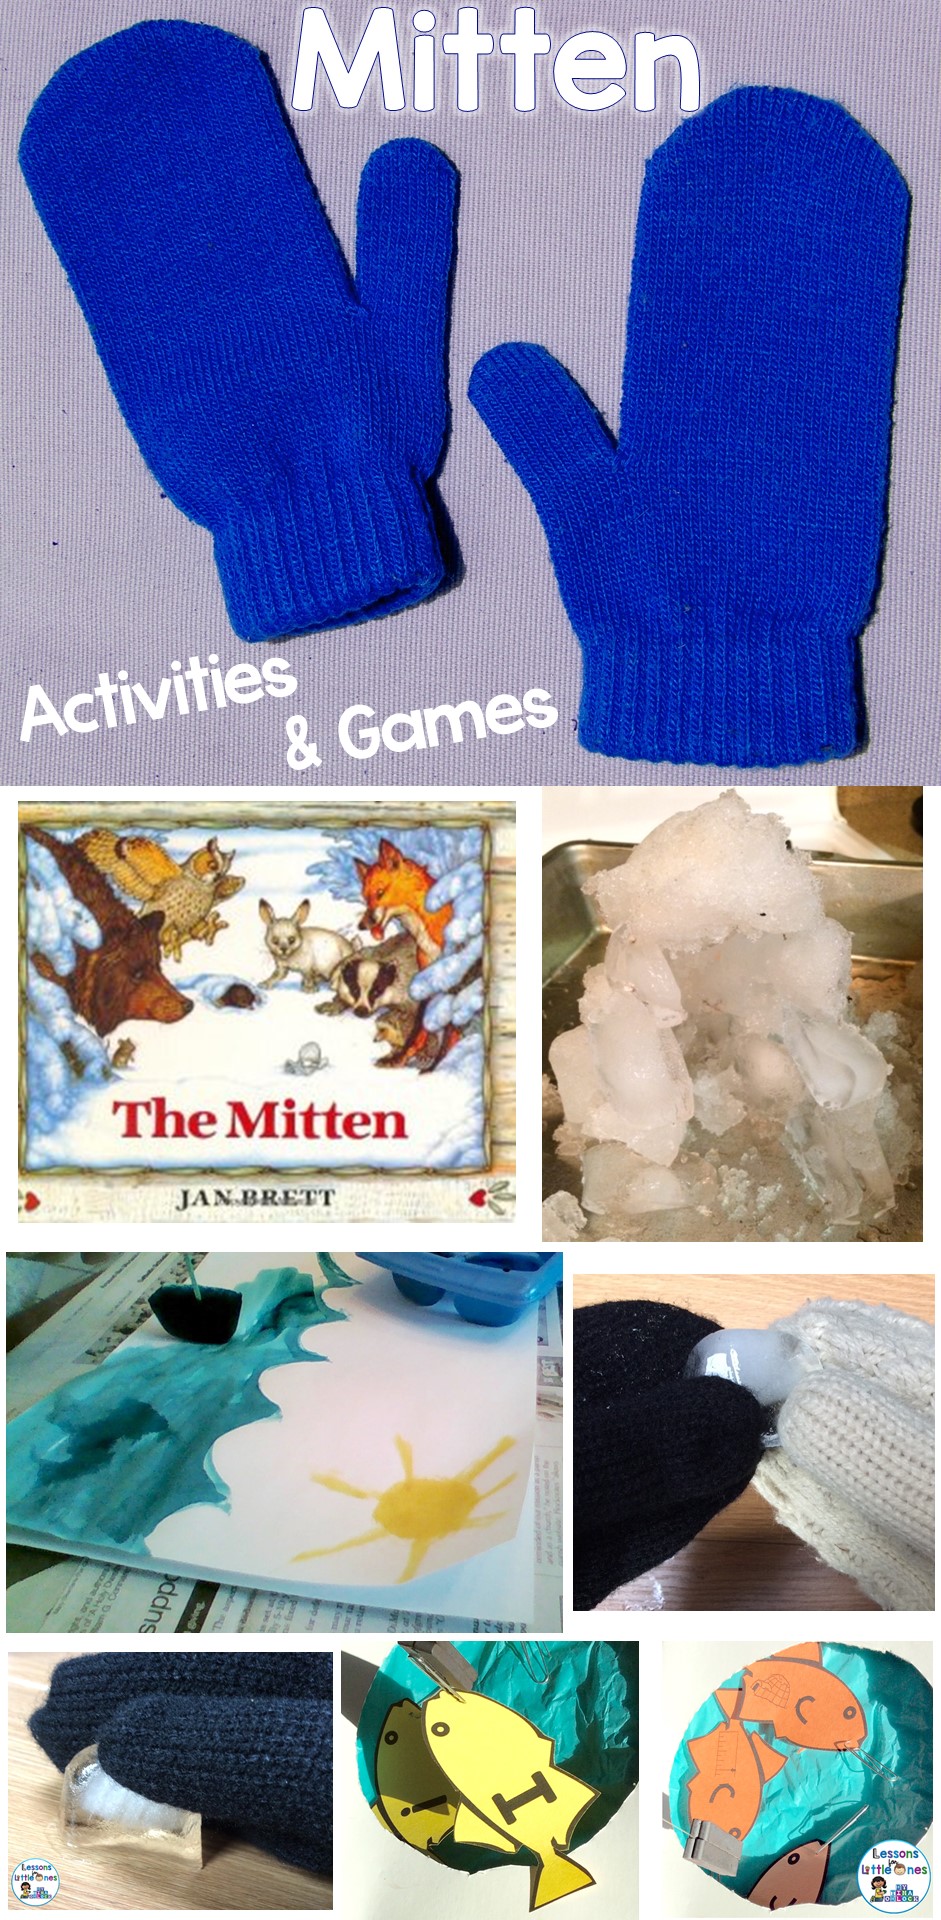 Mitten Activities & Games for the book The Mitten